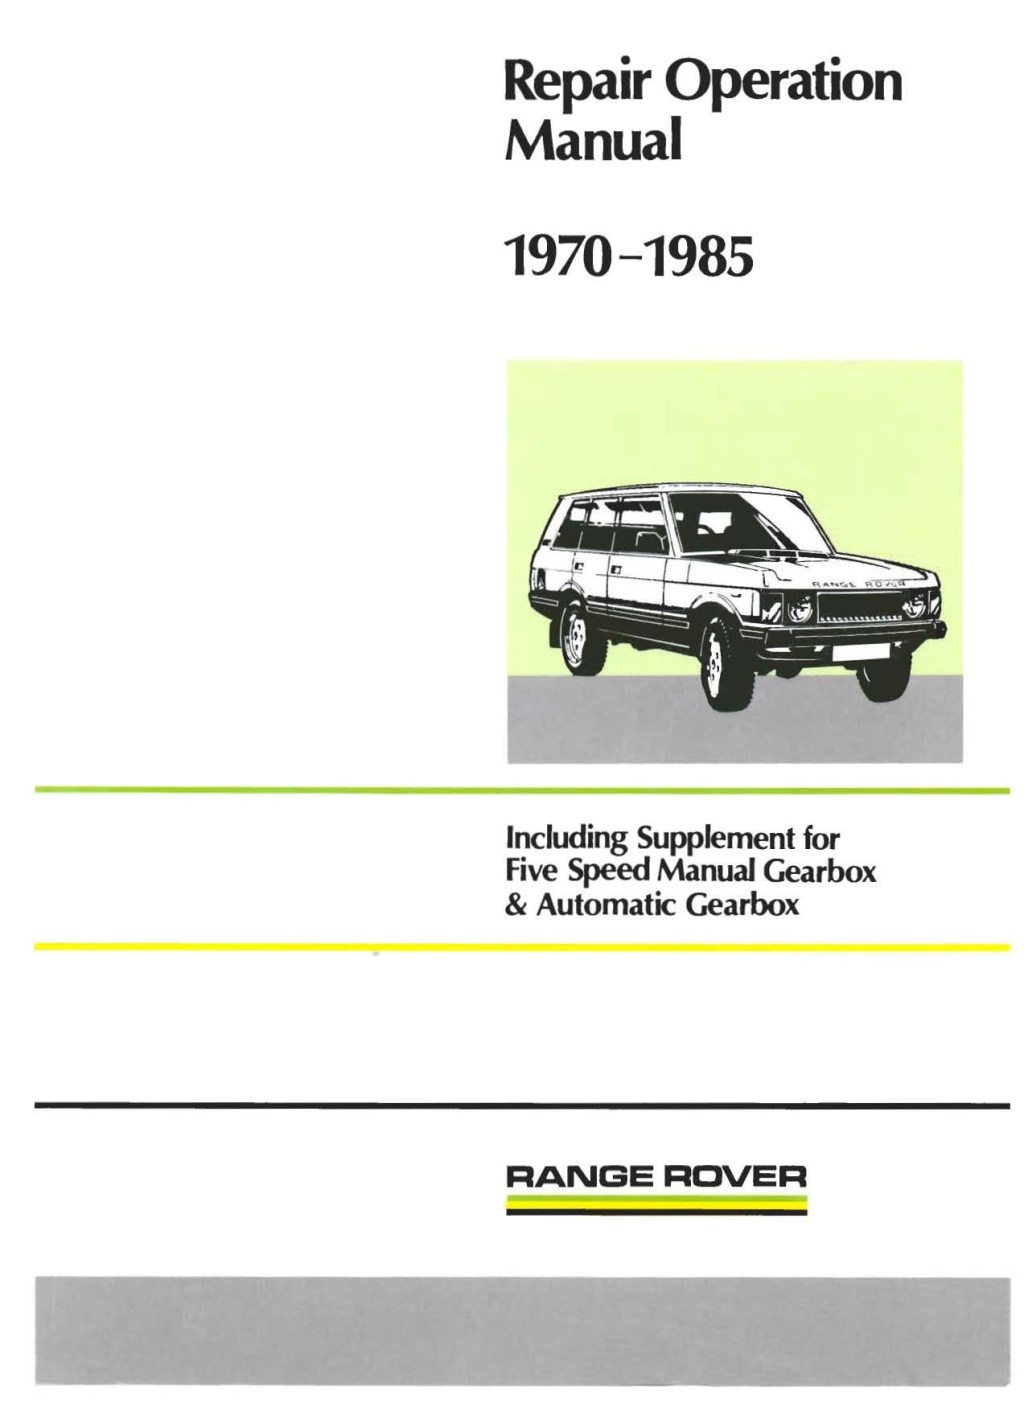 Picture of: Range Rover Service Repair Manual by kmrdisbnvmk – Issuu